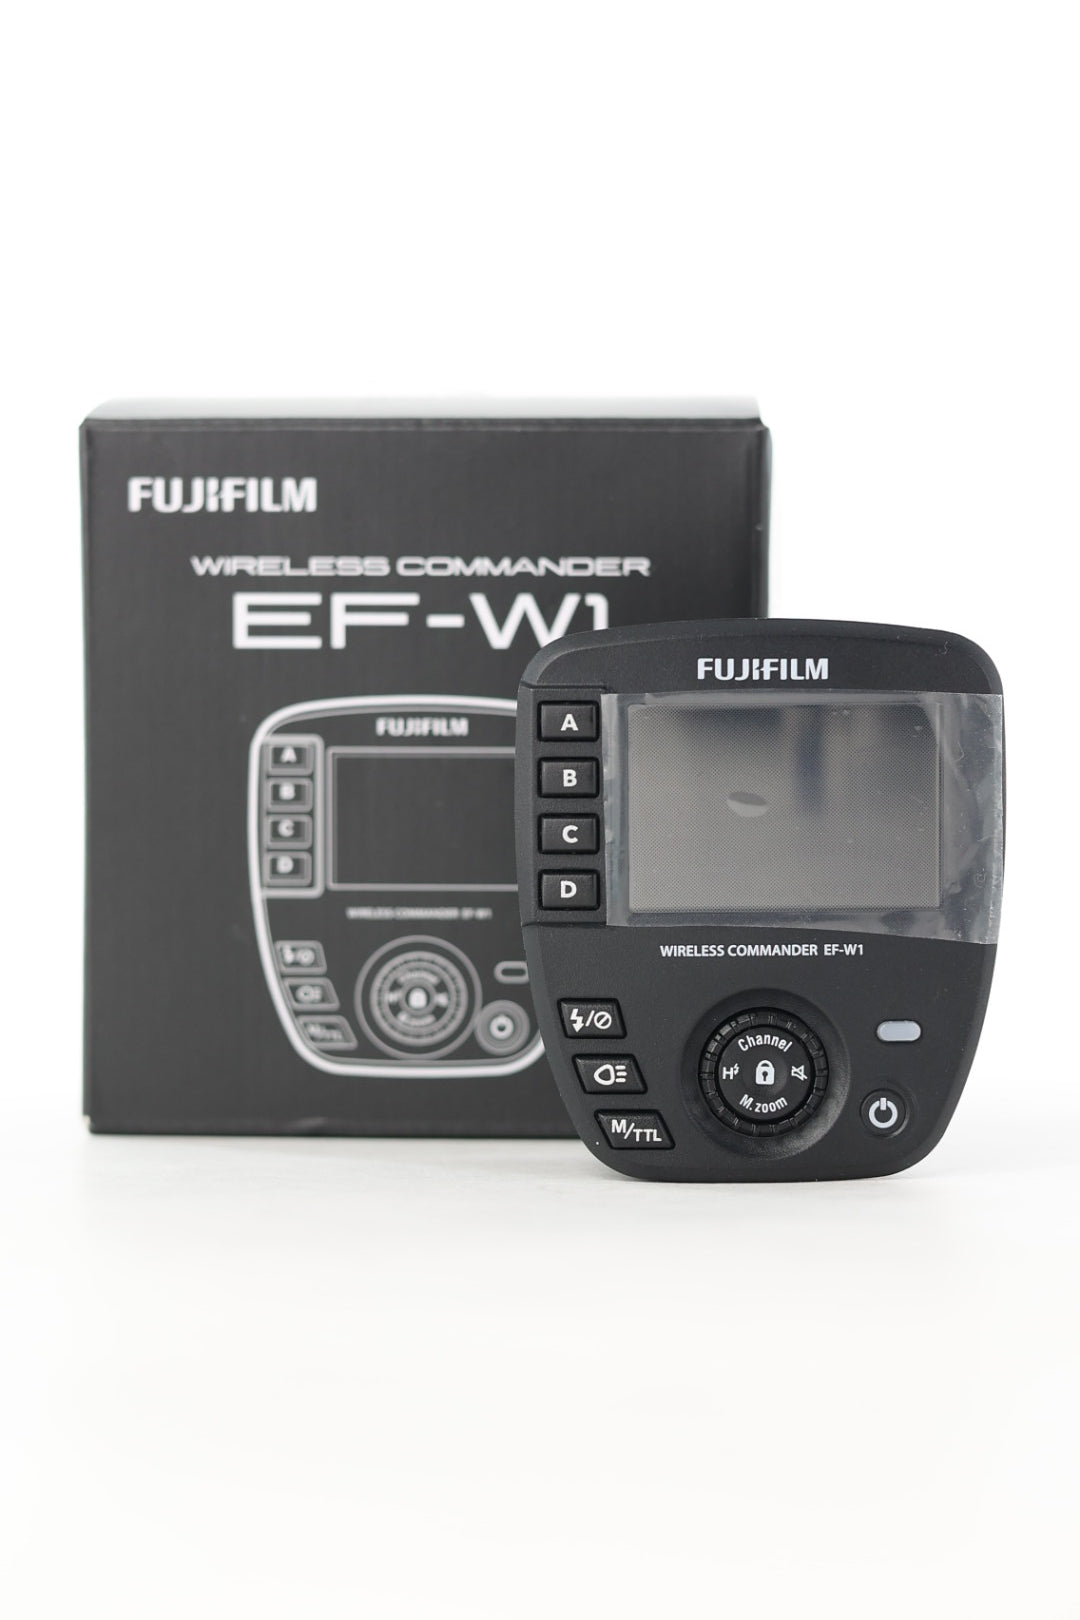 Fujifilm EFW1/12218 EF-W1 Wireless Commander, Used